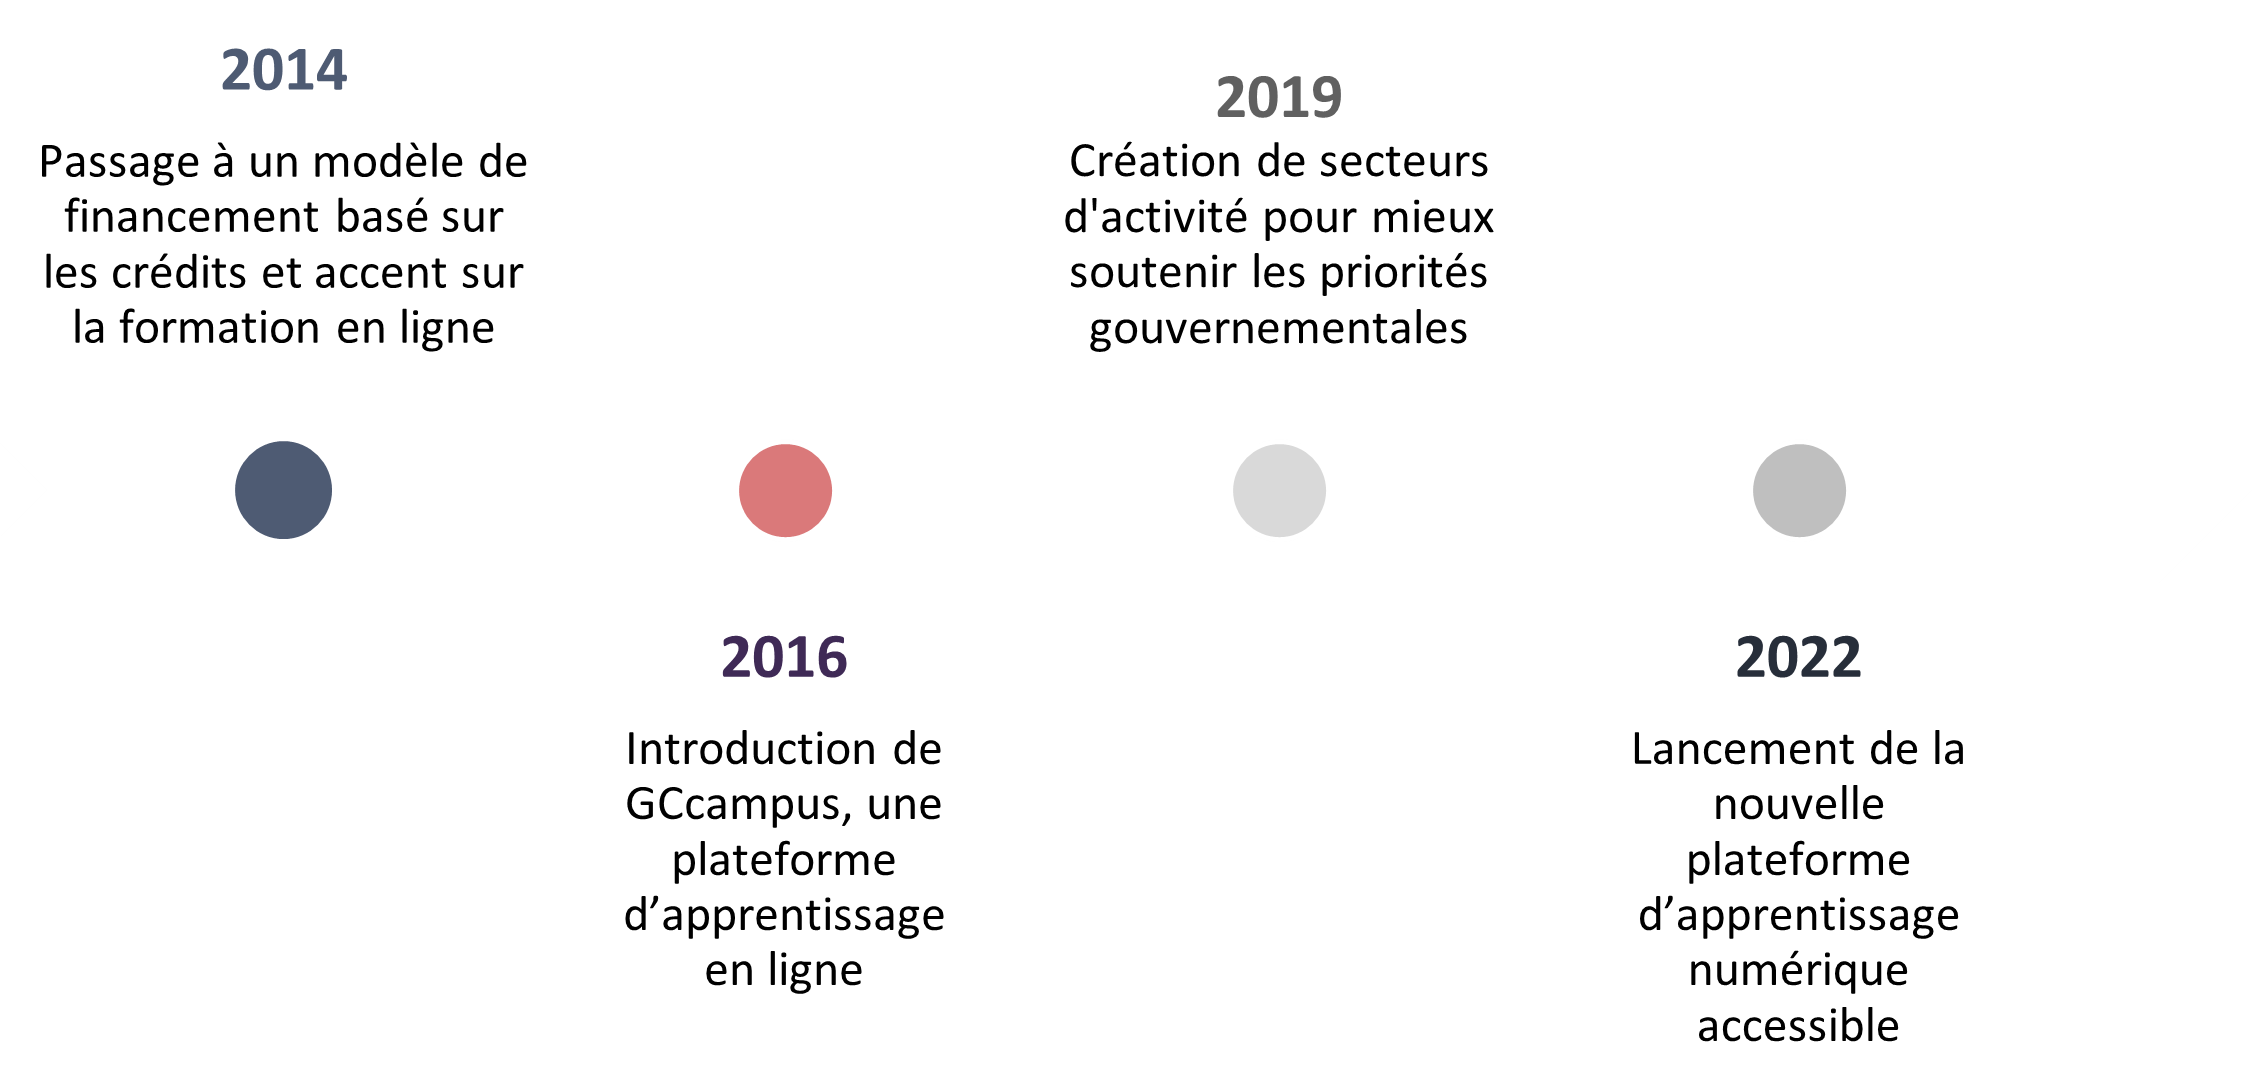 Figure 1: Timeline of key organizational initiatives from 2014-2023